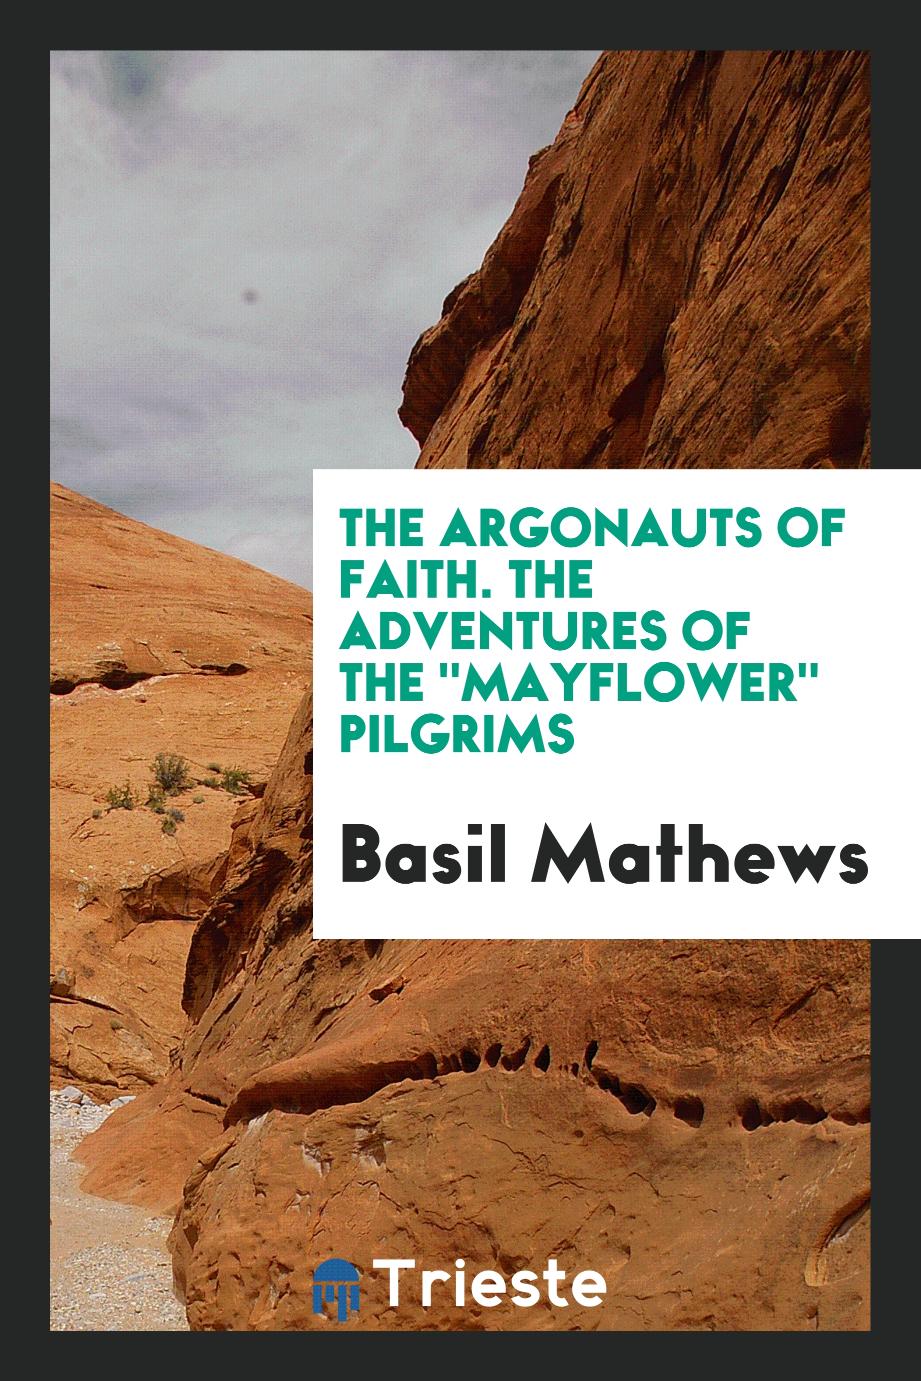 The Argonauts of faith. The adventures of the "Mayflower" pilgrims